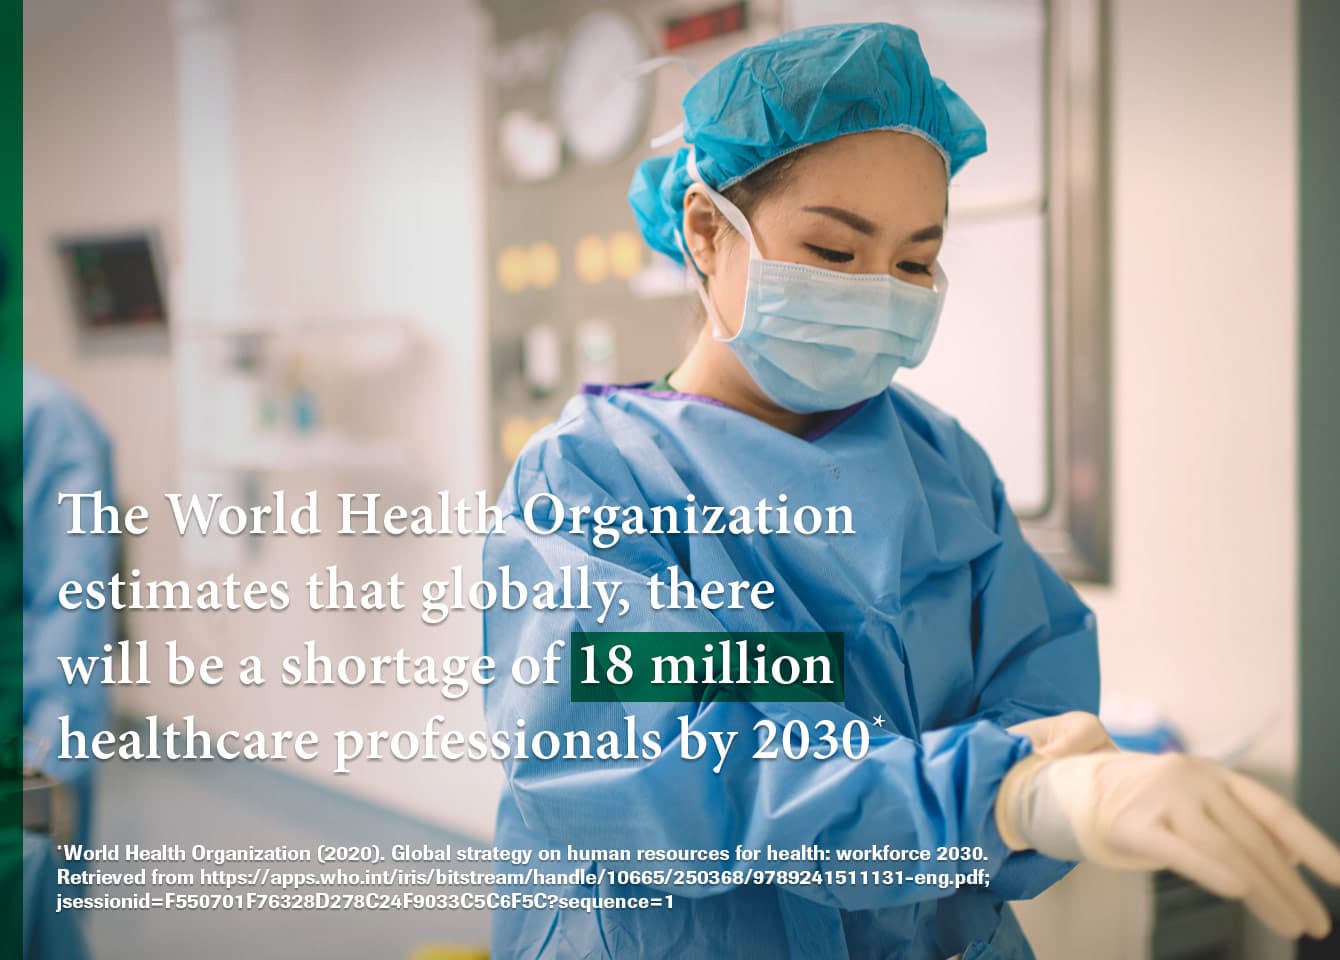 A World Health Organization statistic regarding a predicted shortage of healthcare professionals.